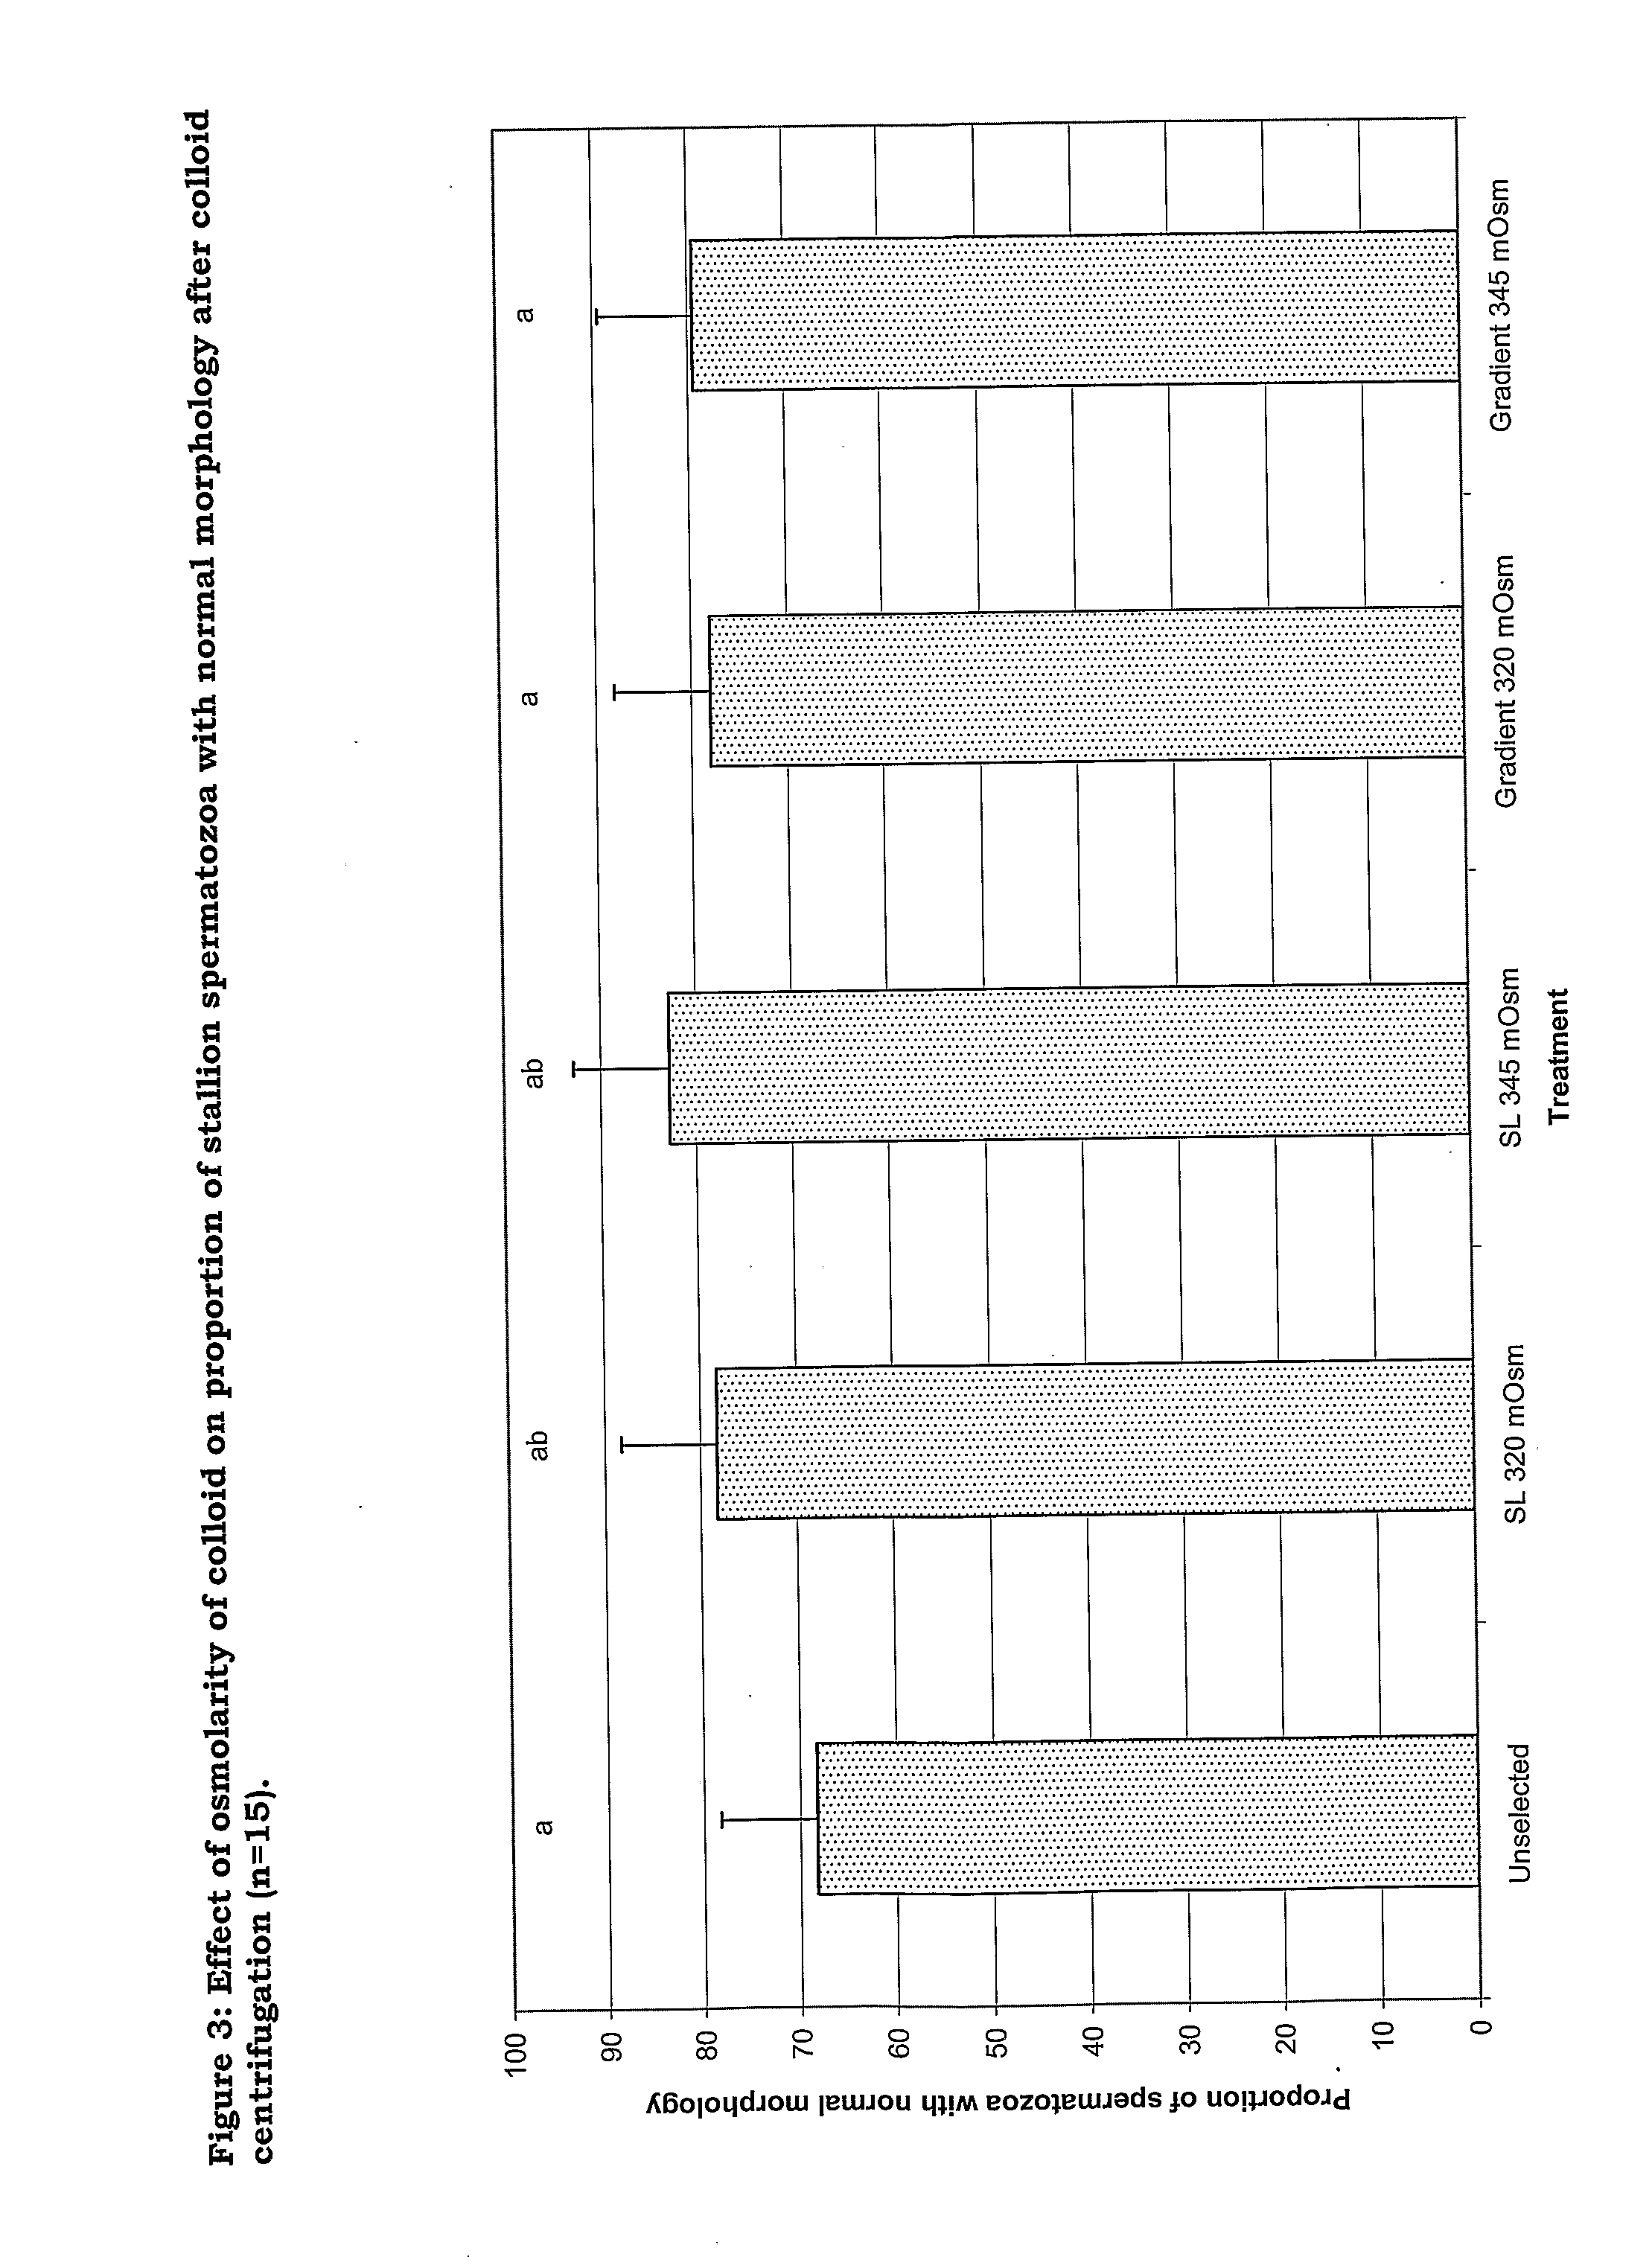 Composition for separating spermatozoa from a semen sample